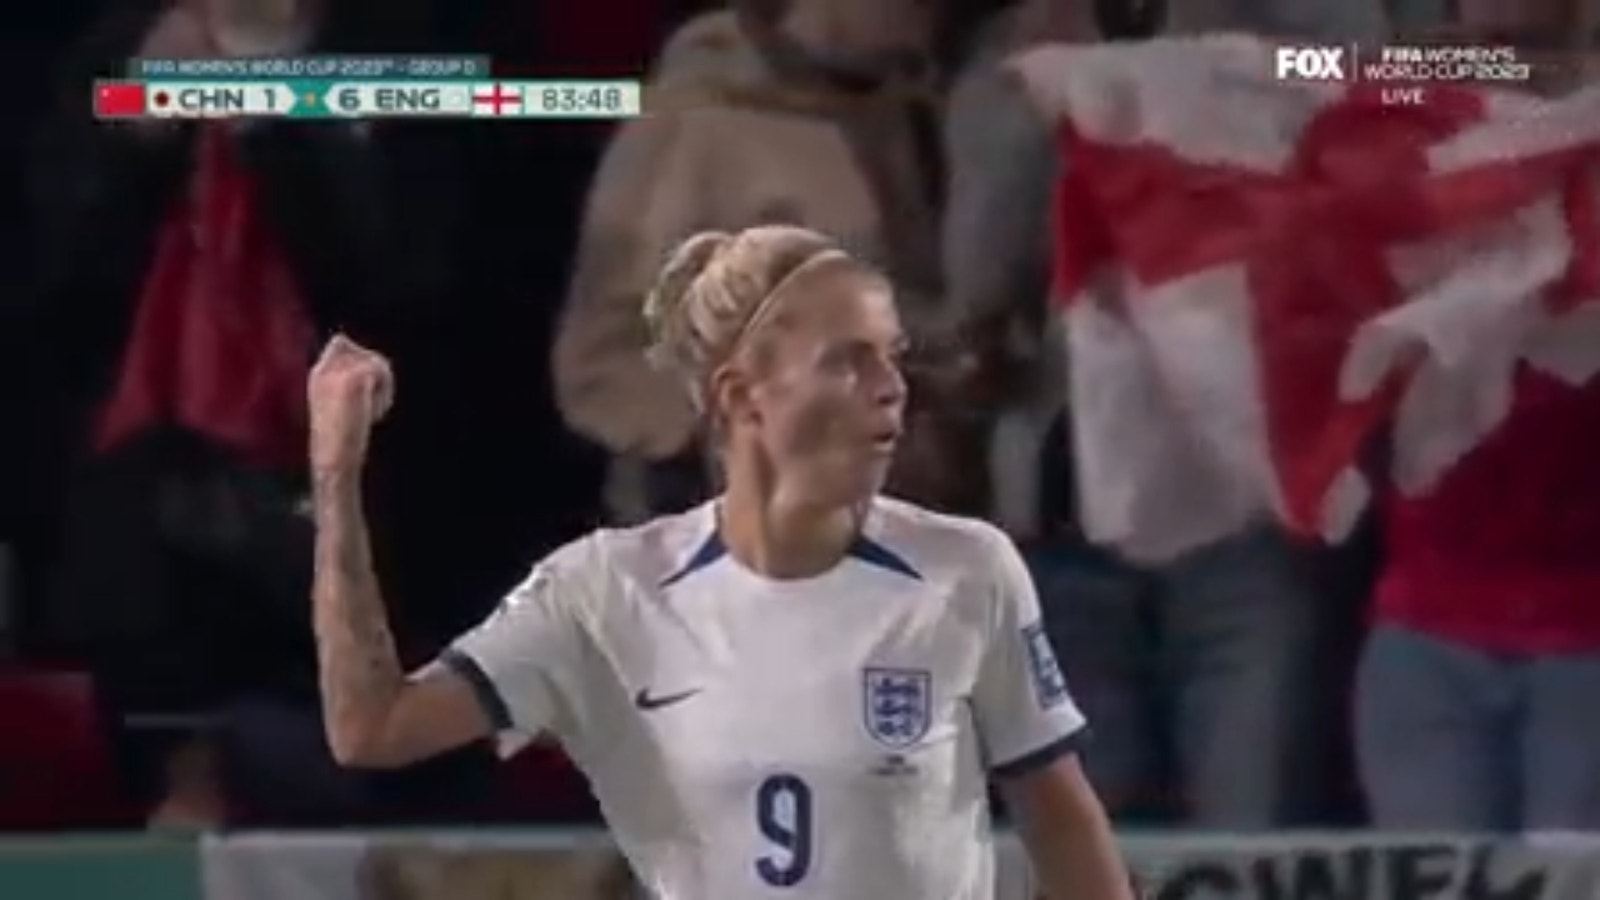 England's Rachel Daly scores goal vs. China in 84'